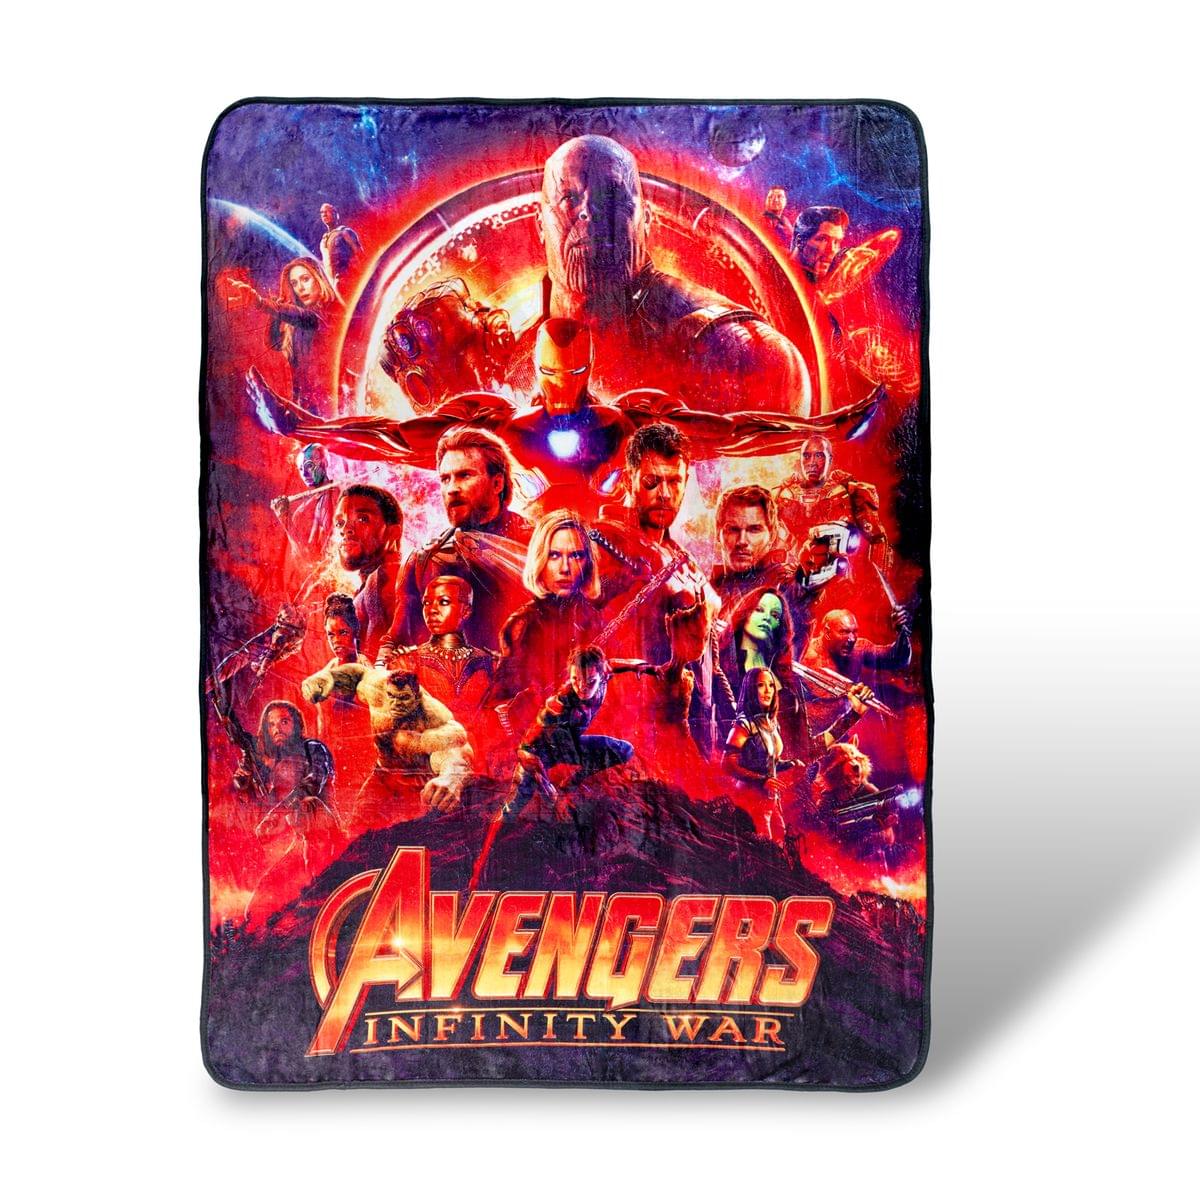 Avengers Infinity War Lightweight Fleece Throw Blanket| 45x60 Inches